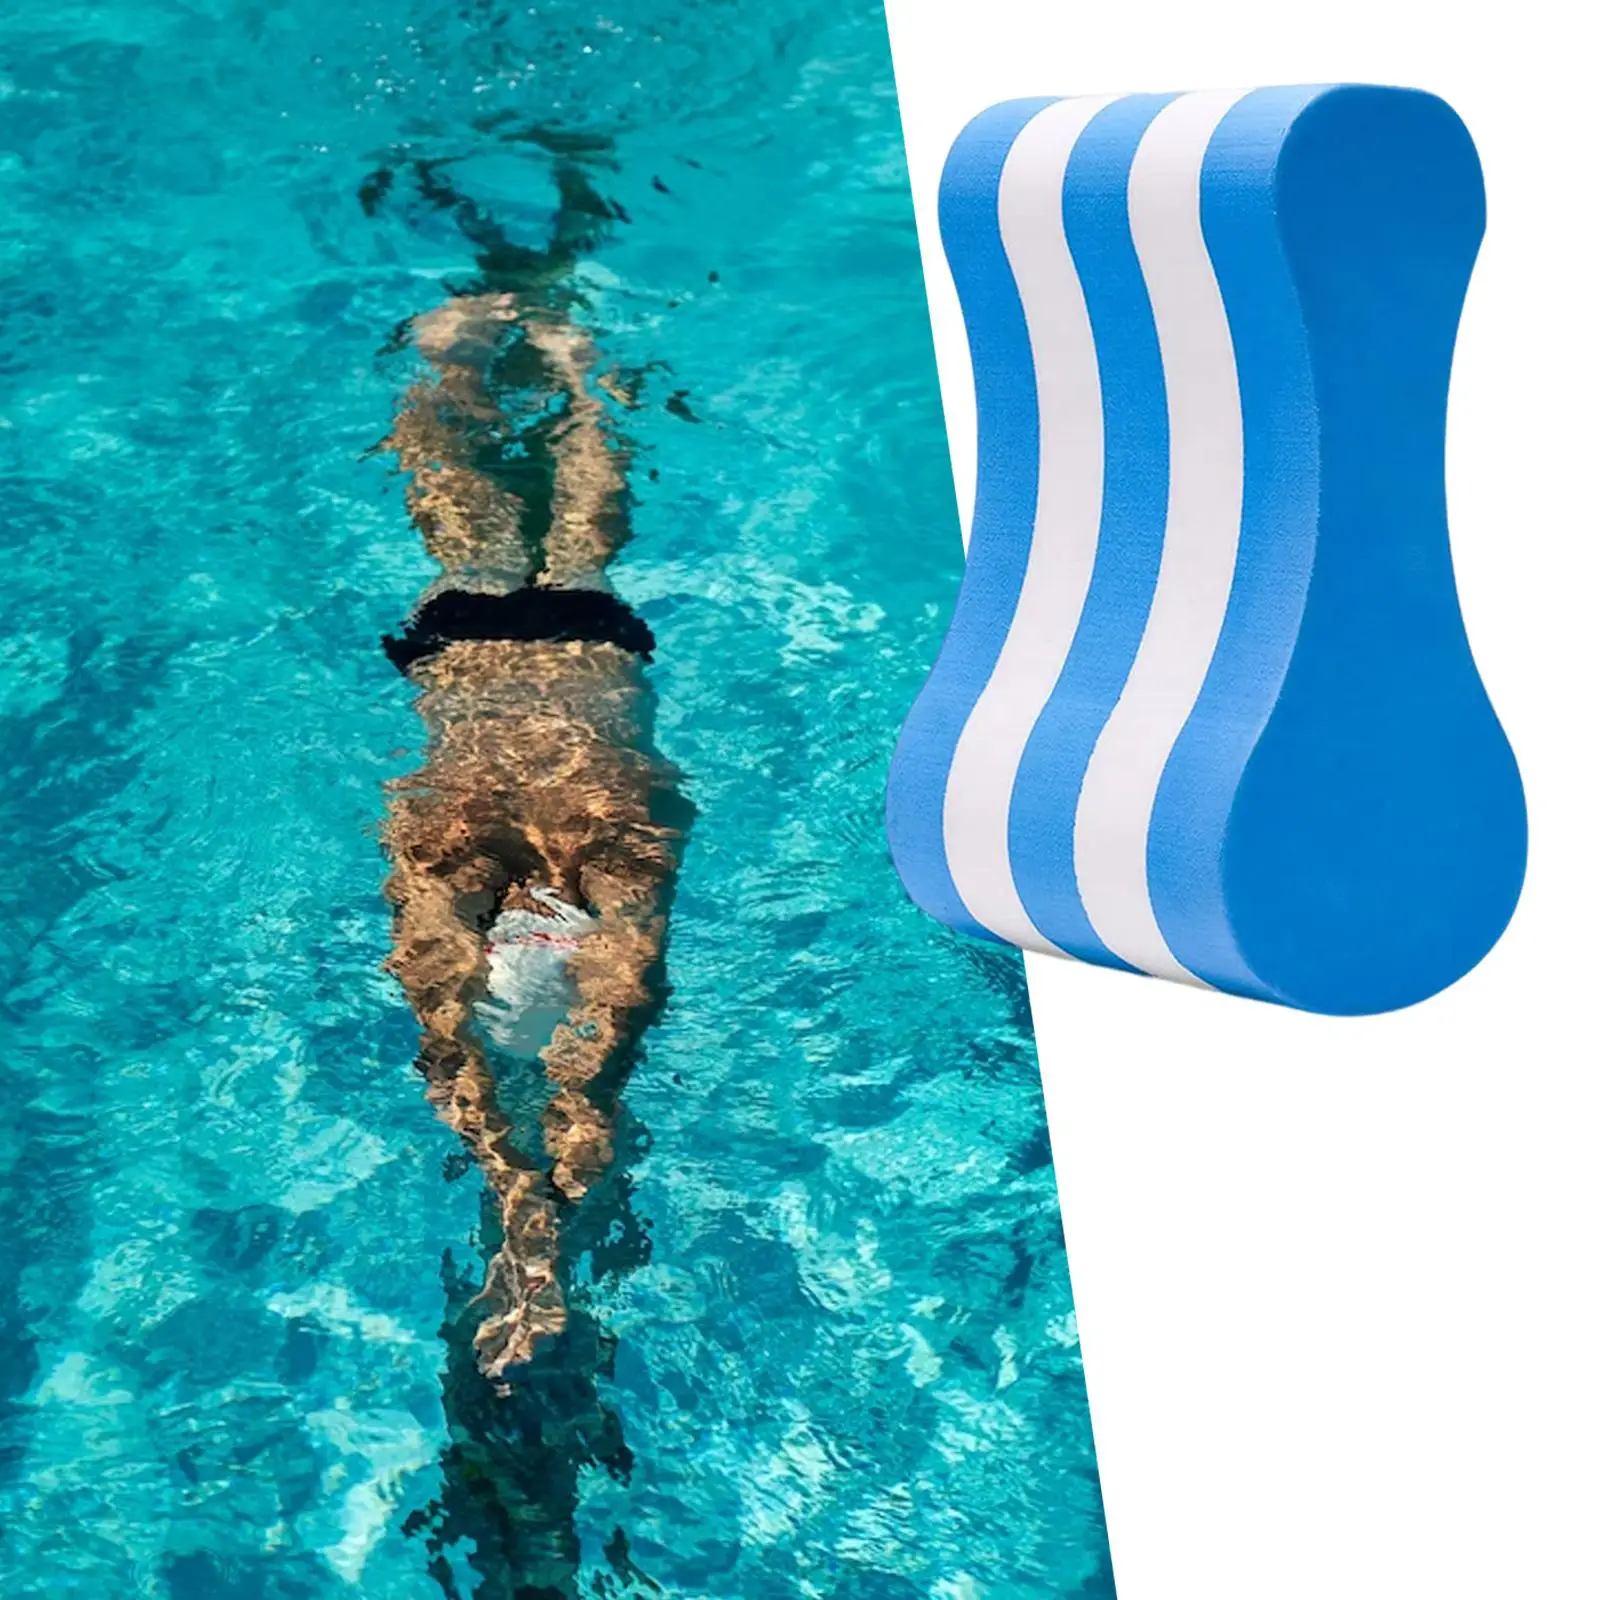 Pull Buoy Leg Float Buoyancy Flotation Exercise Portable Pool Training Aid for Unisex Adults Water Exercise